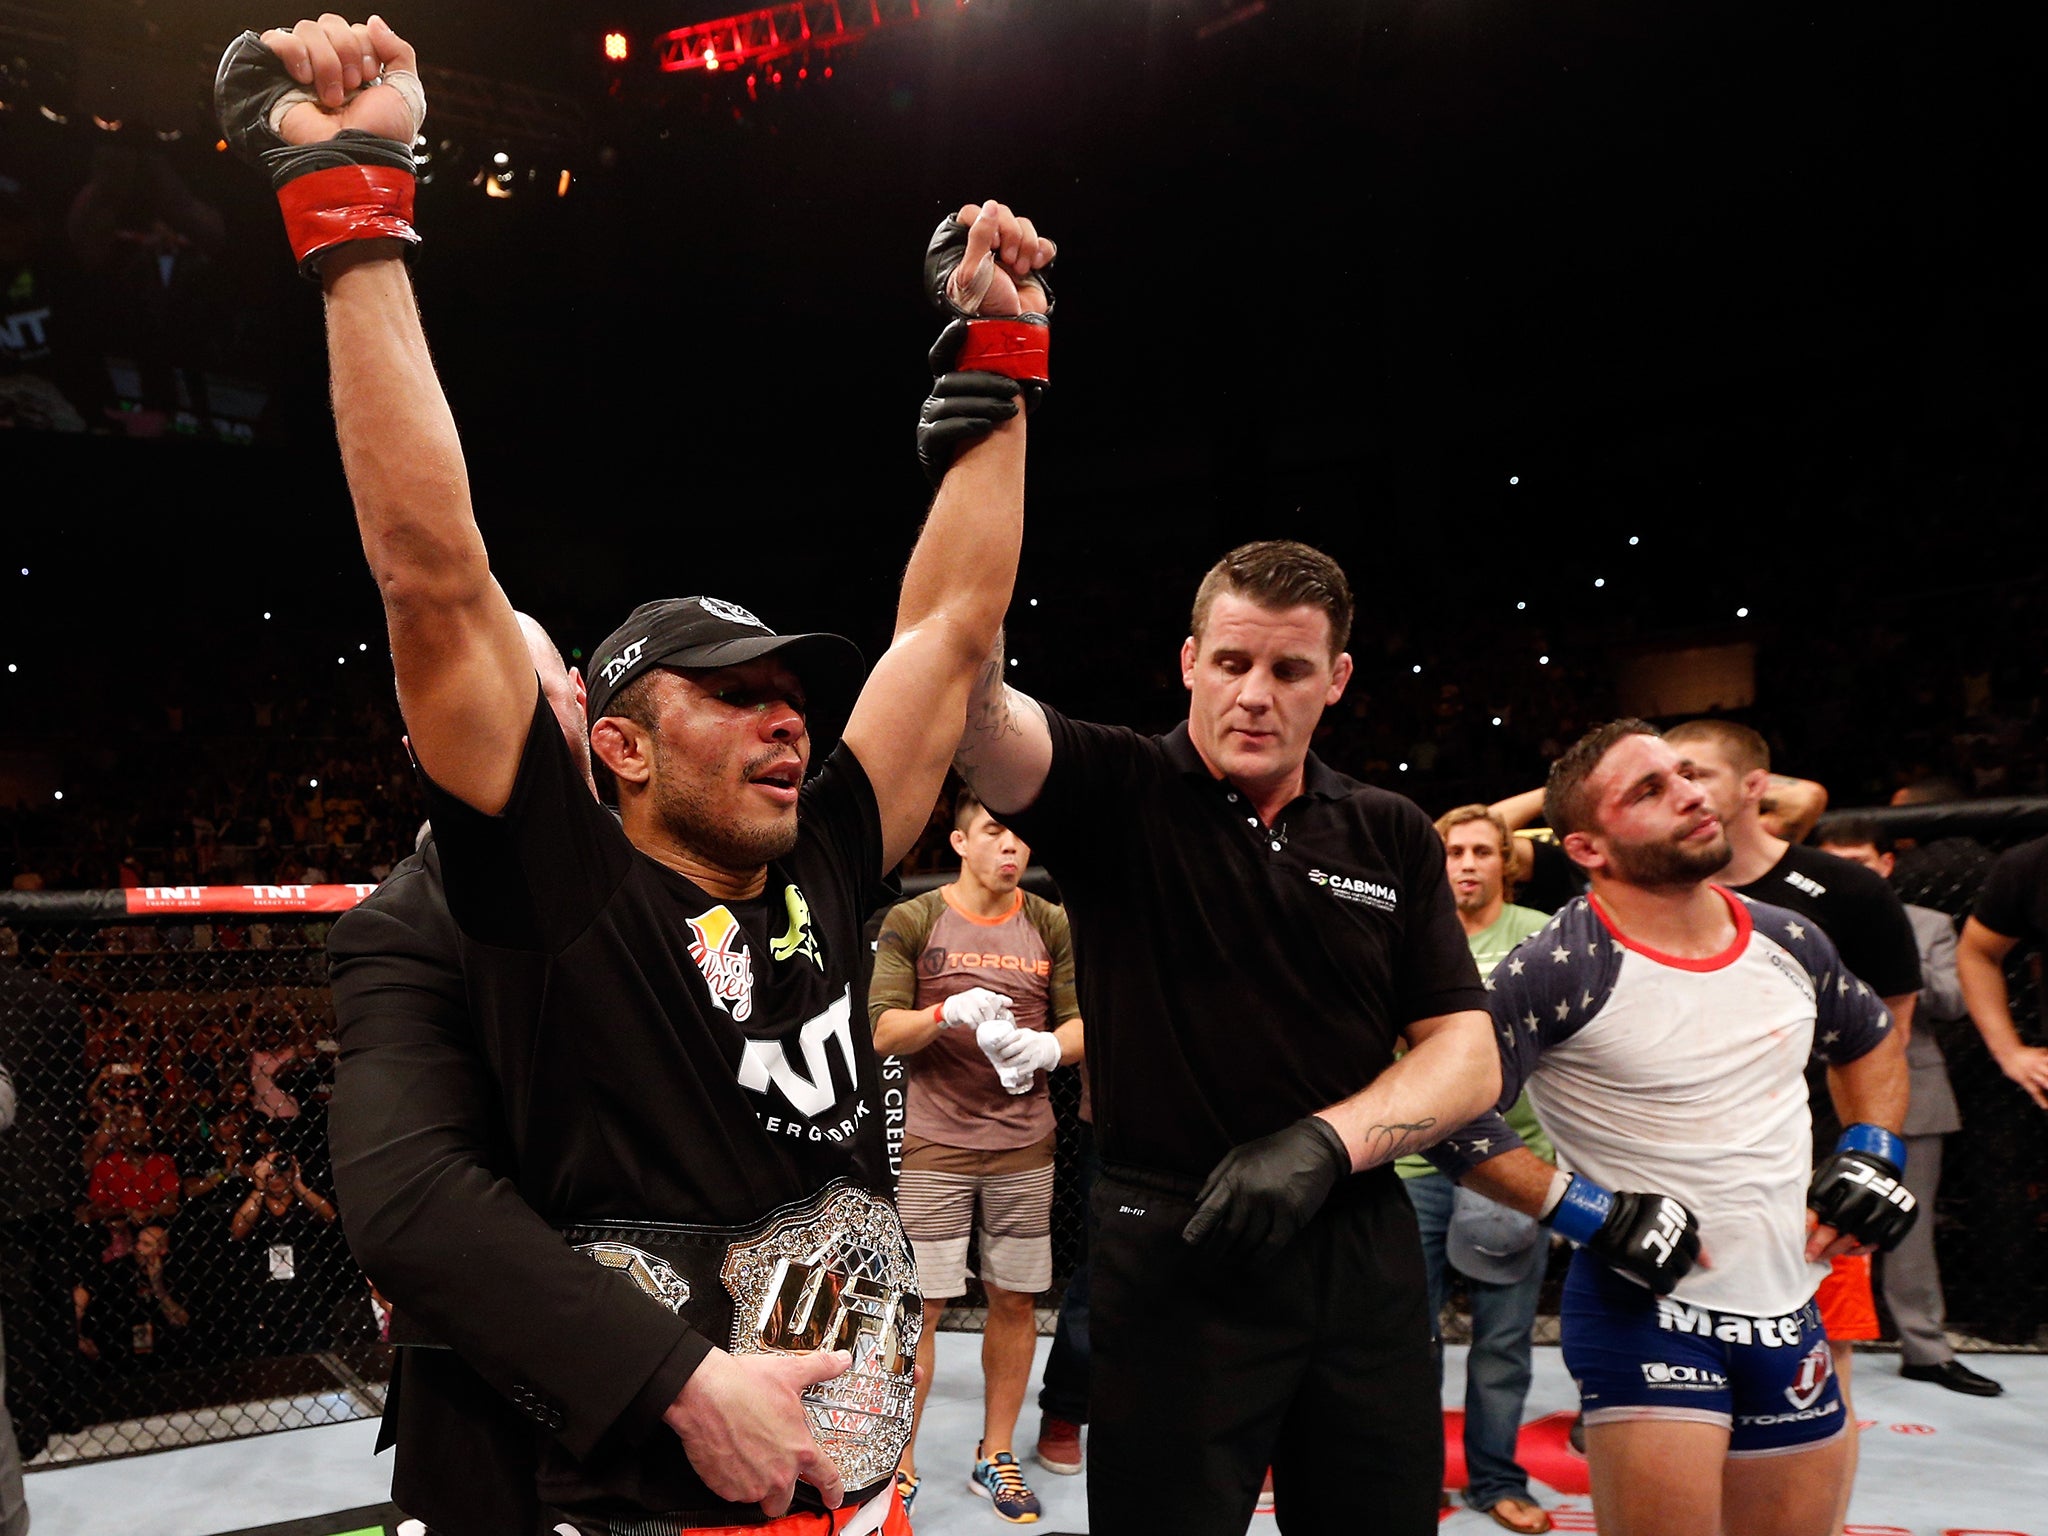 Jose Aldo celebrates after his unanimous decision victory at UFC 179